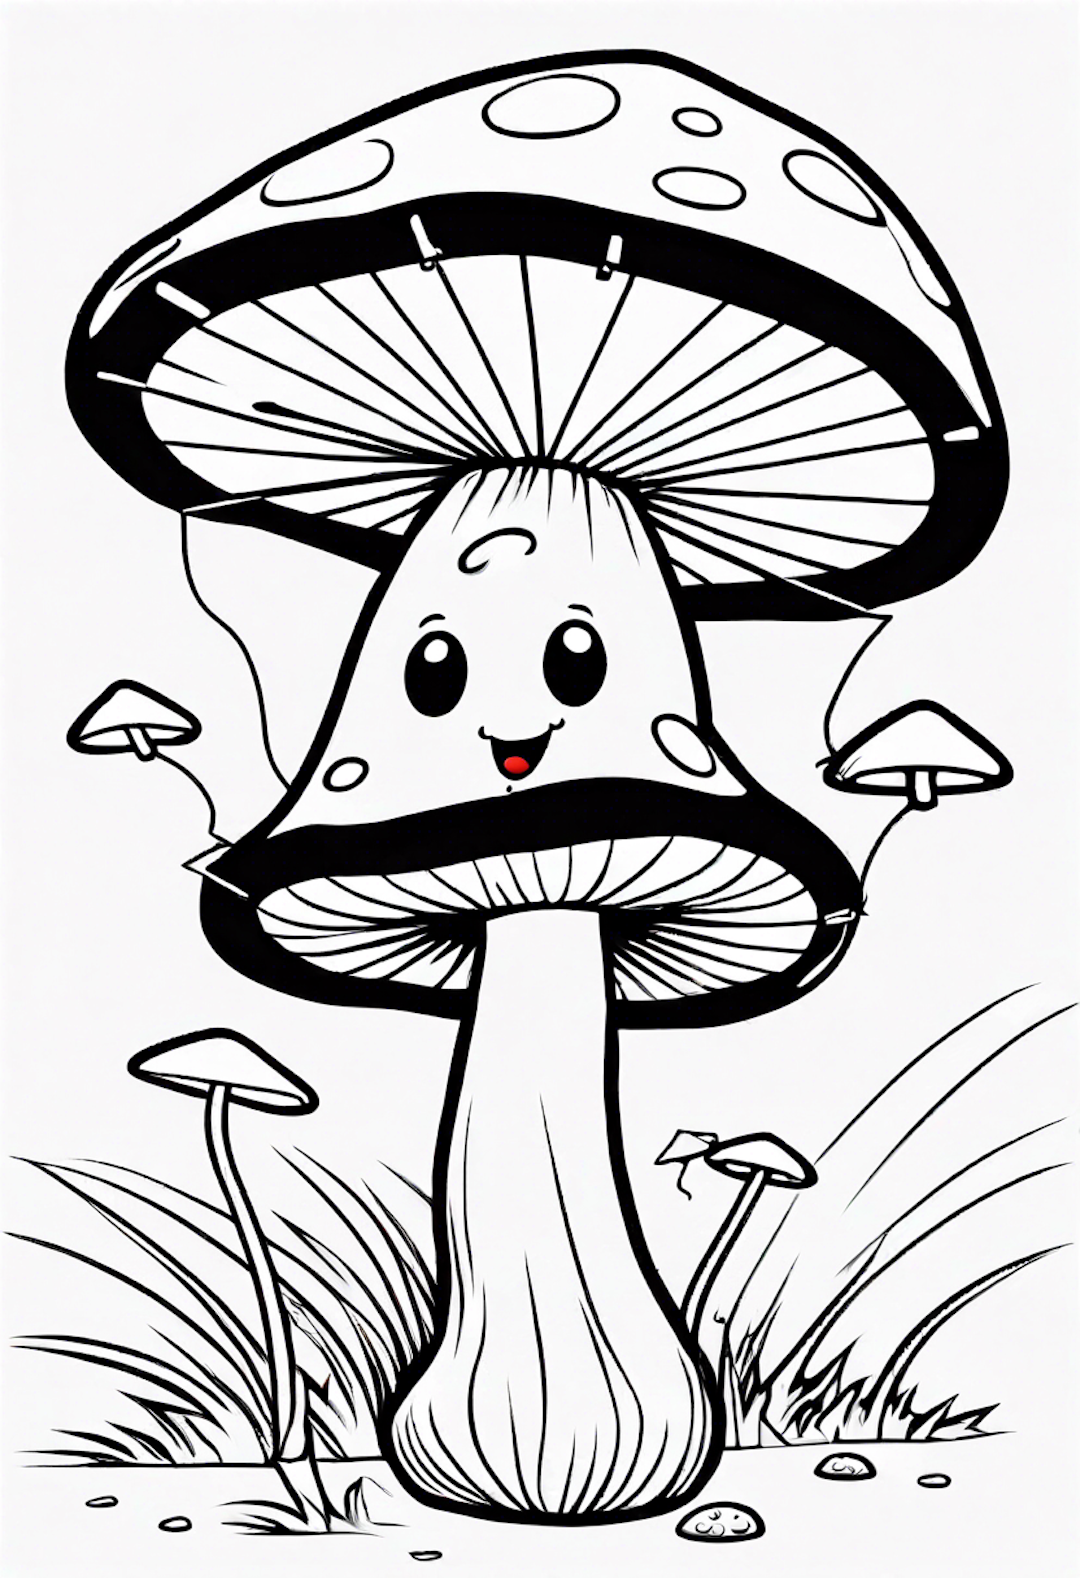 A Cartoon Mushroom Flying A Kite